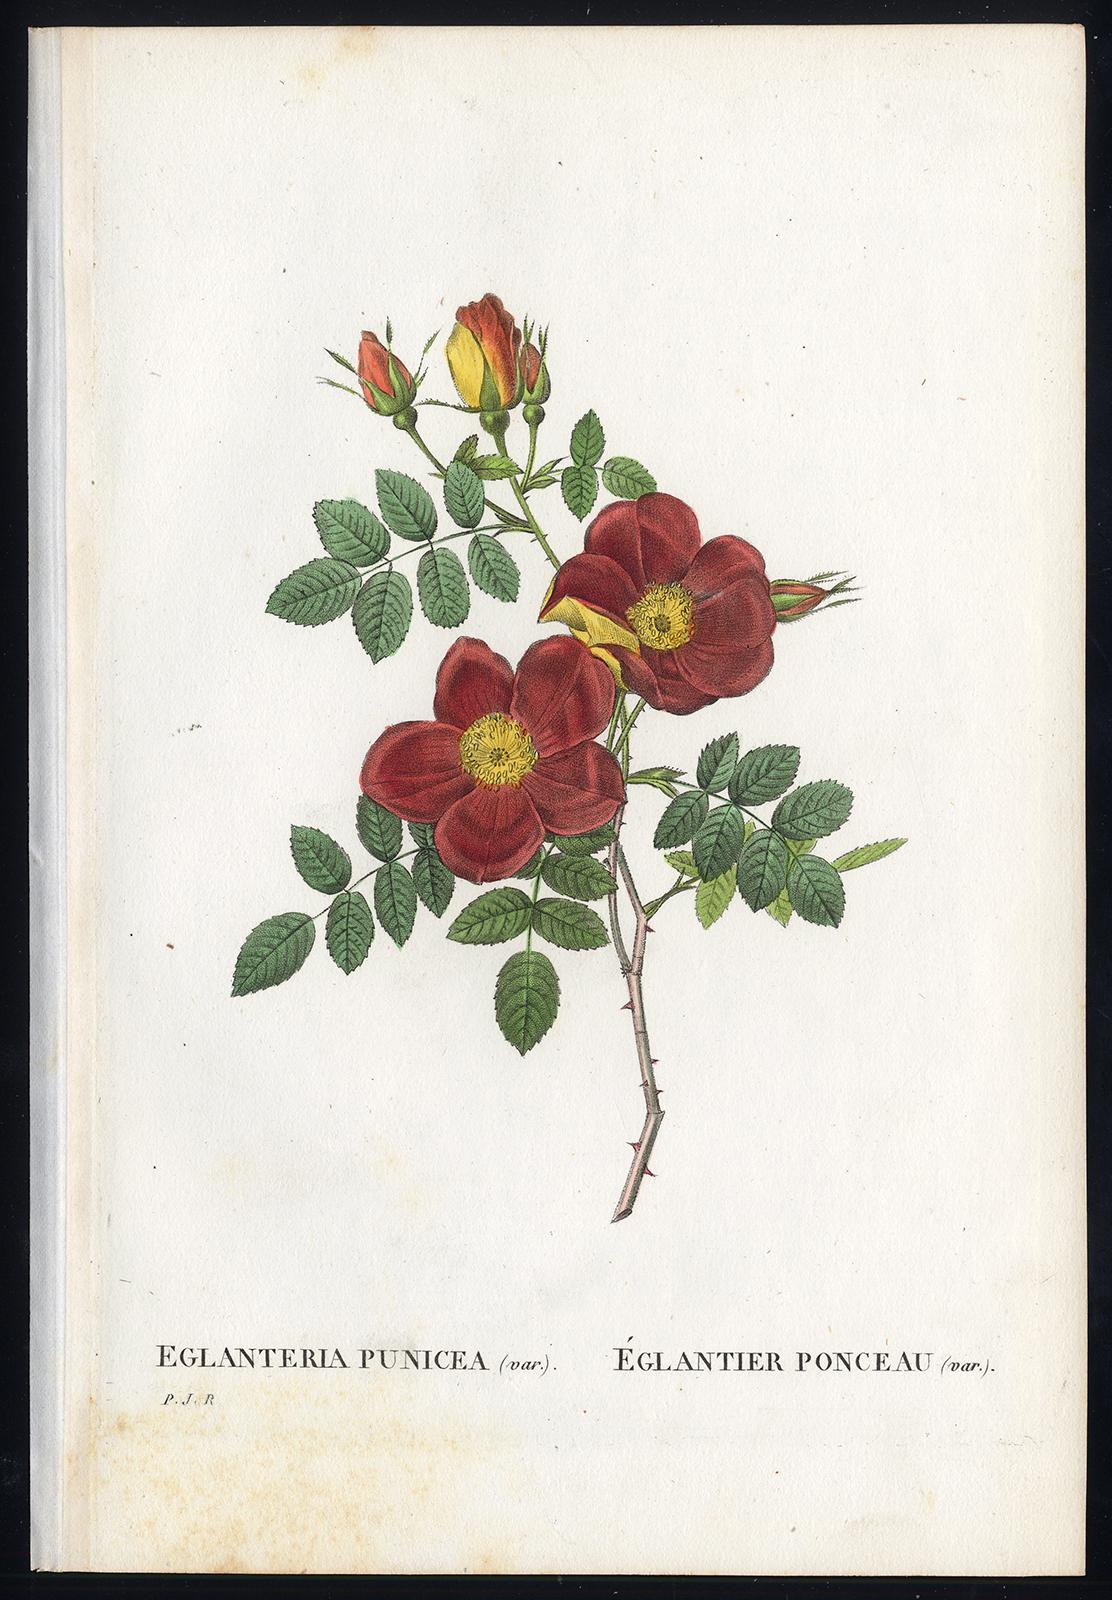 Pierre-Joseph Redouté Print - Austrian Copper Rose by Redoute - Les Roses - Handcoloured engraving - 19th c.